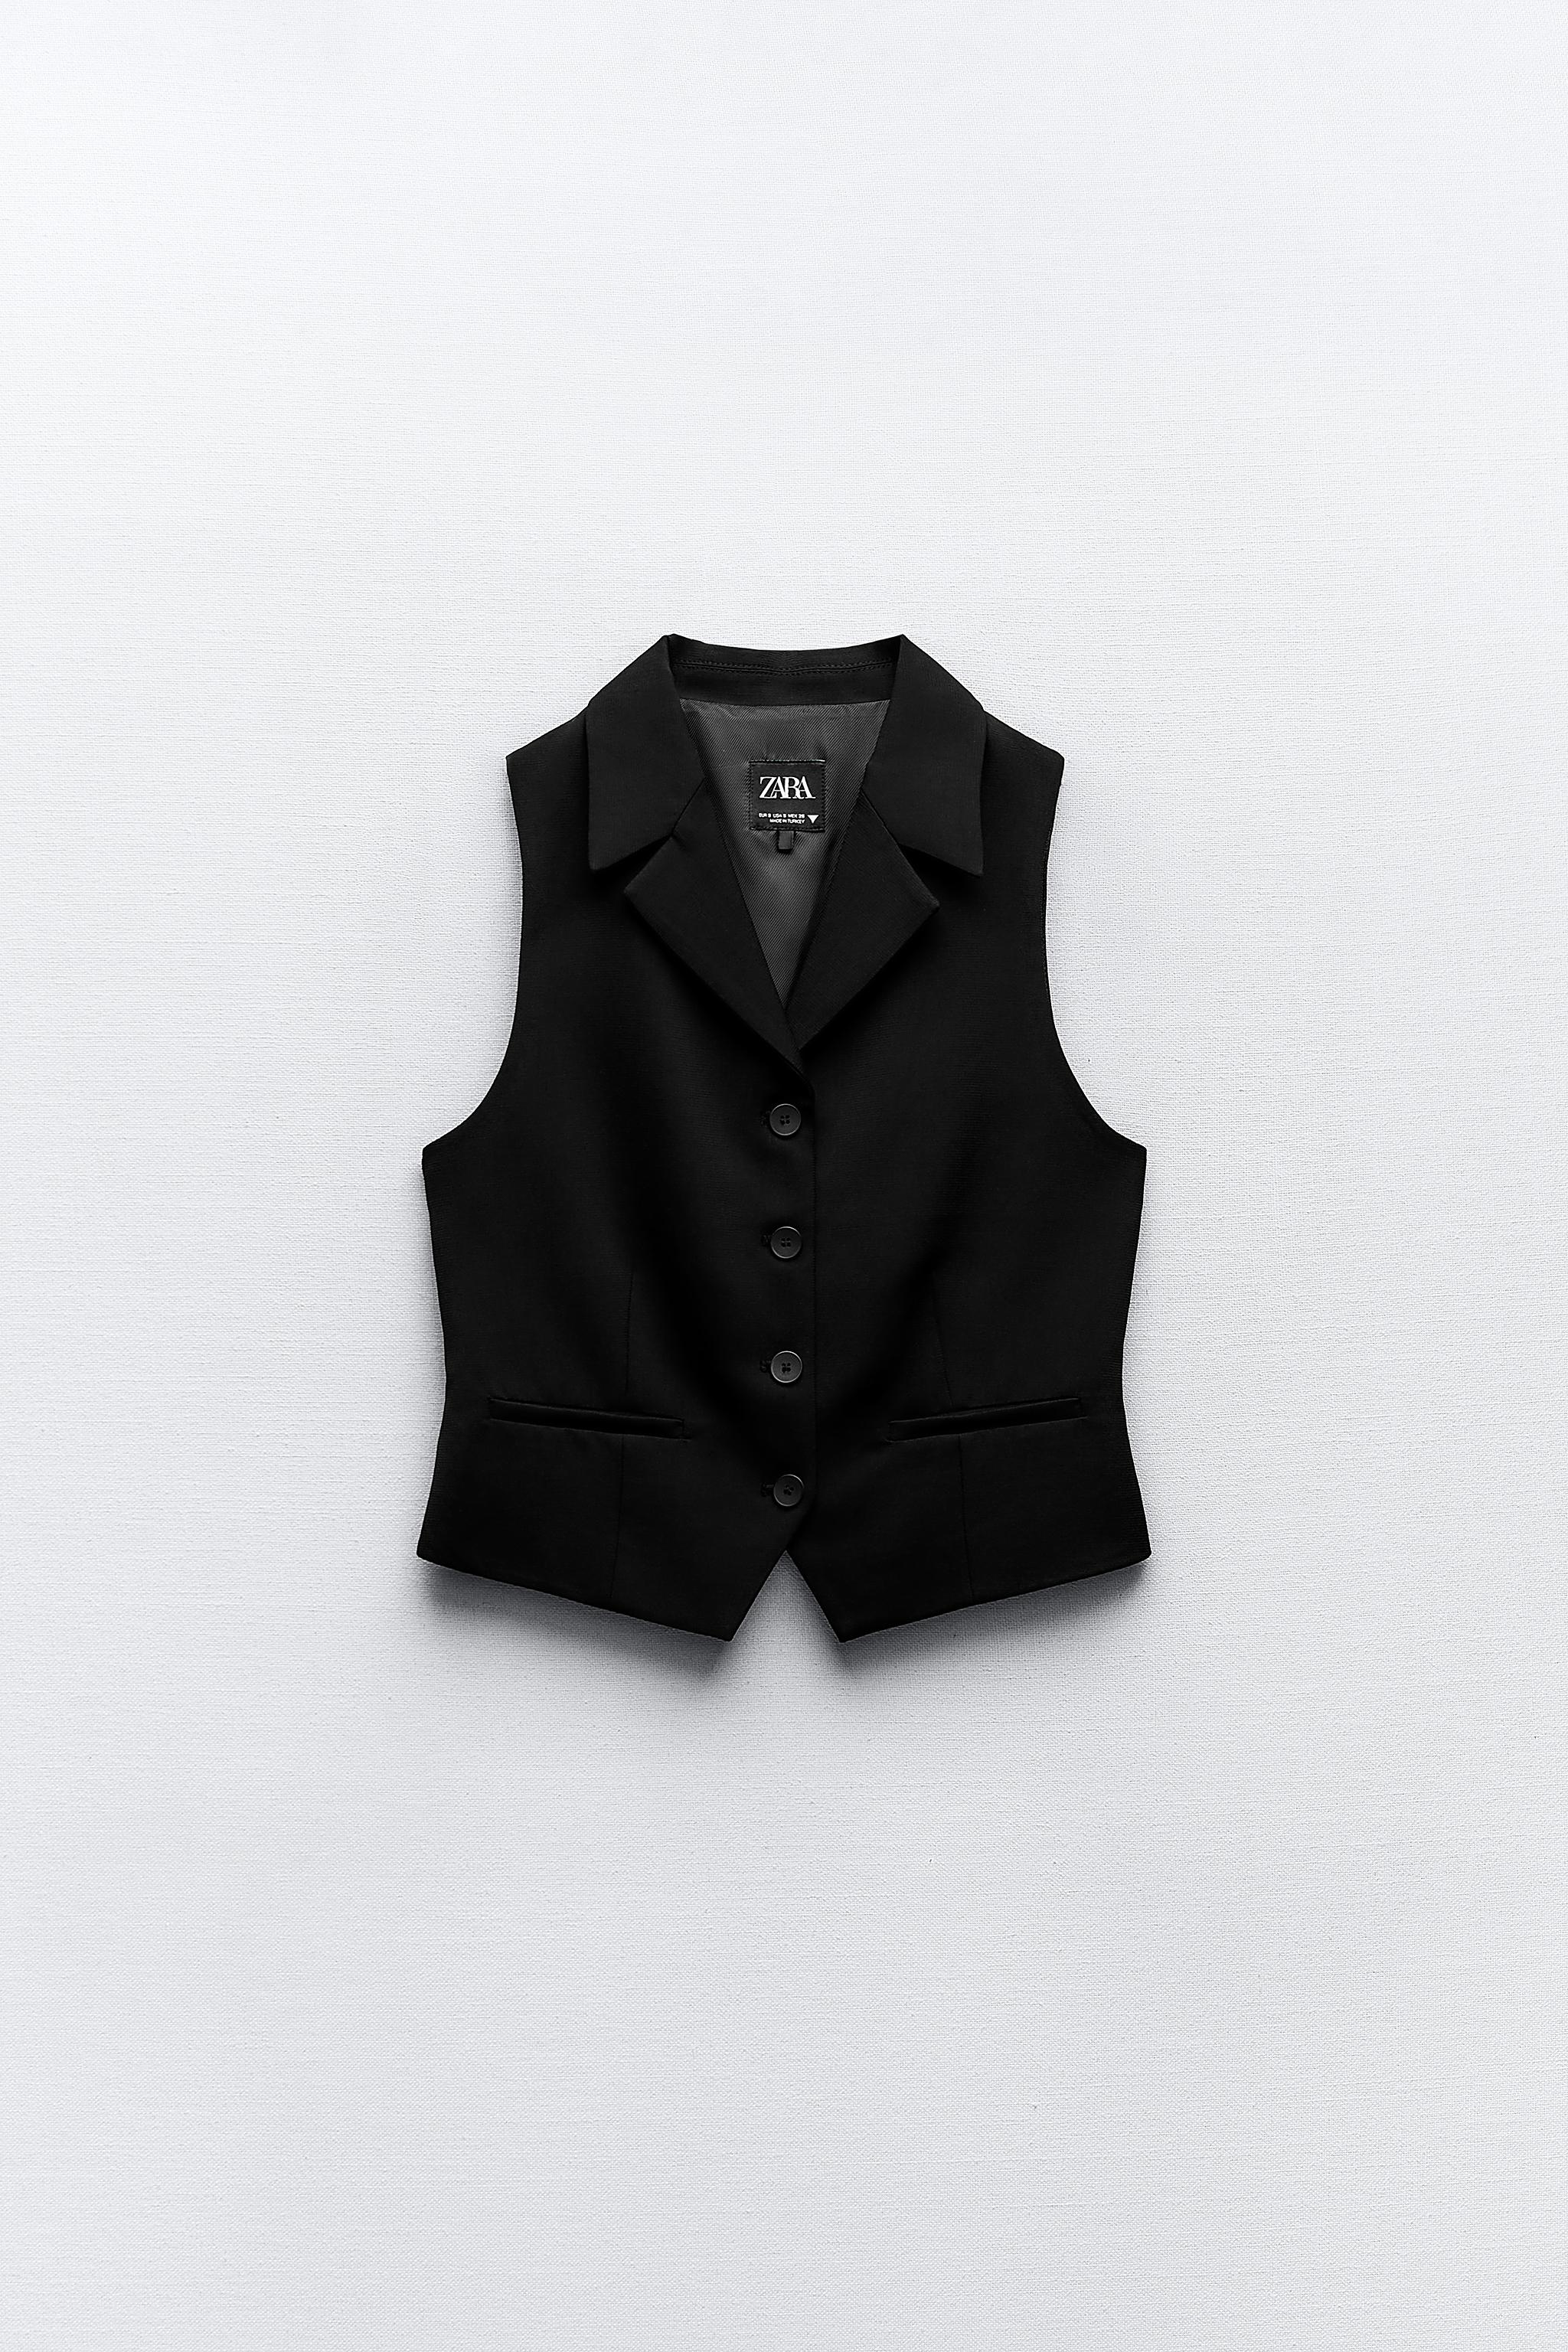 Bralette Top / Zara / Vest / Black / Floral / Bra / Modern Vintage